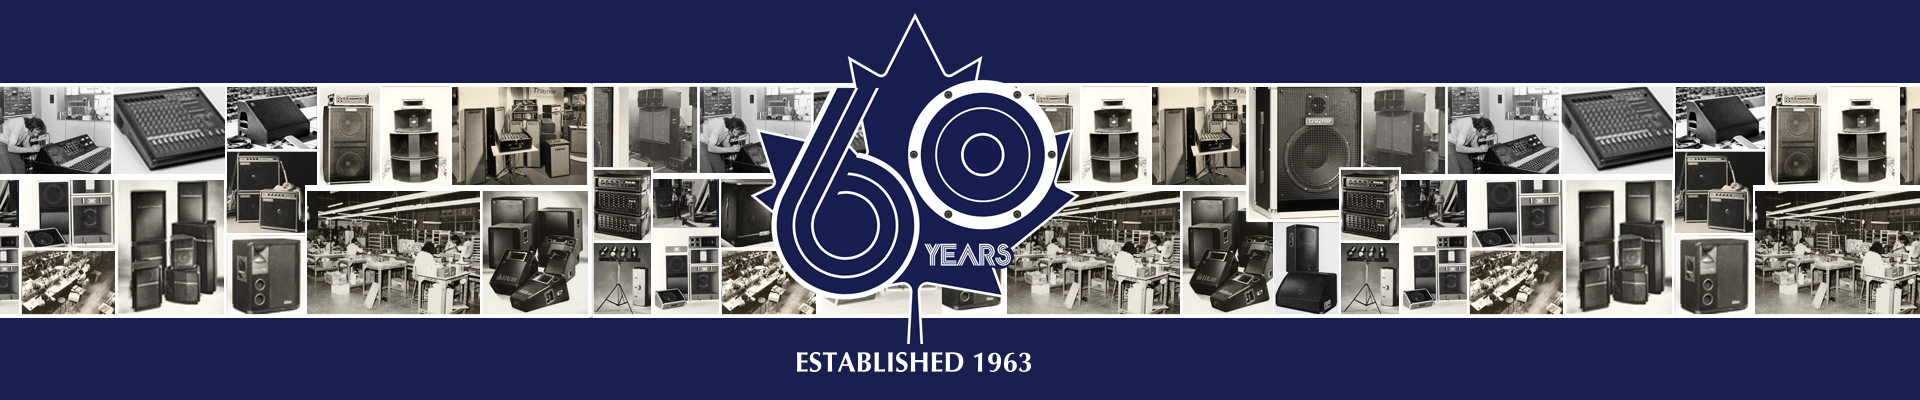 Yorkville 60 Year Anniversary banner